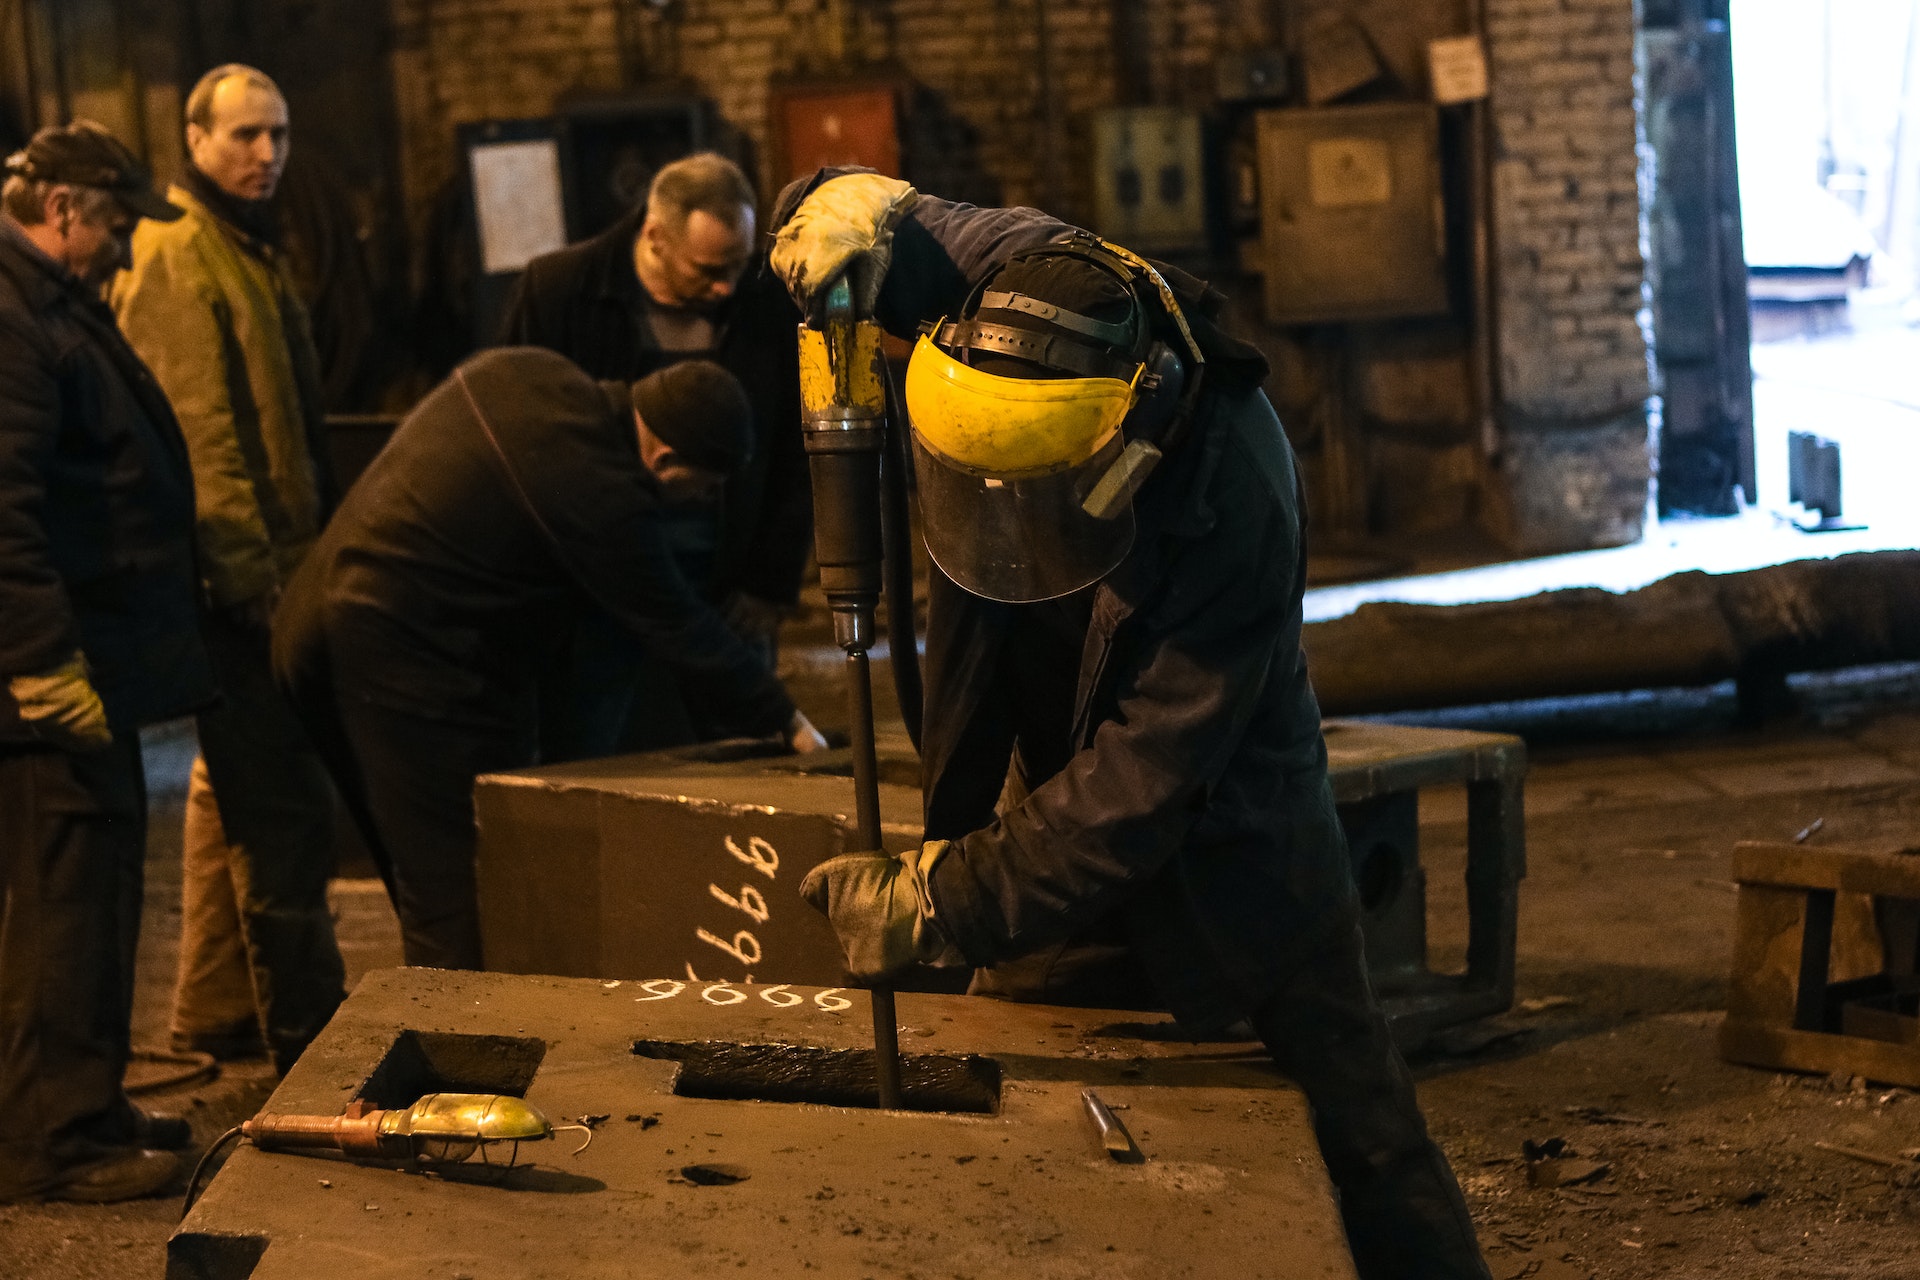 Men working in a factory | Source: Pexels